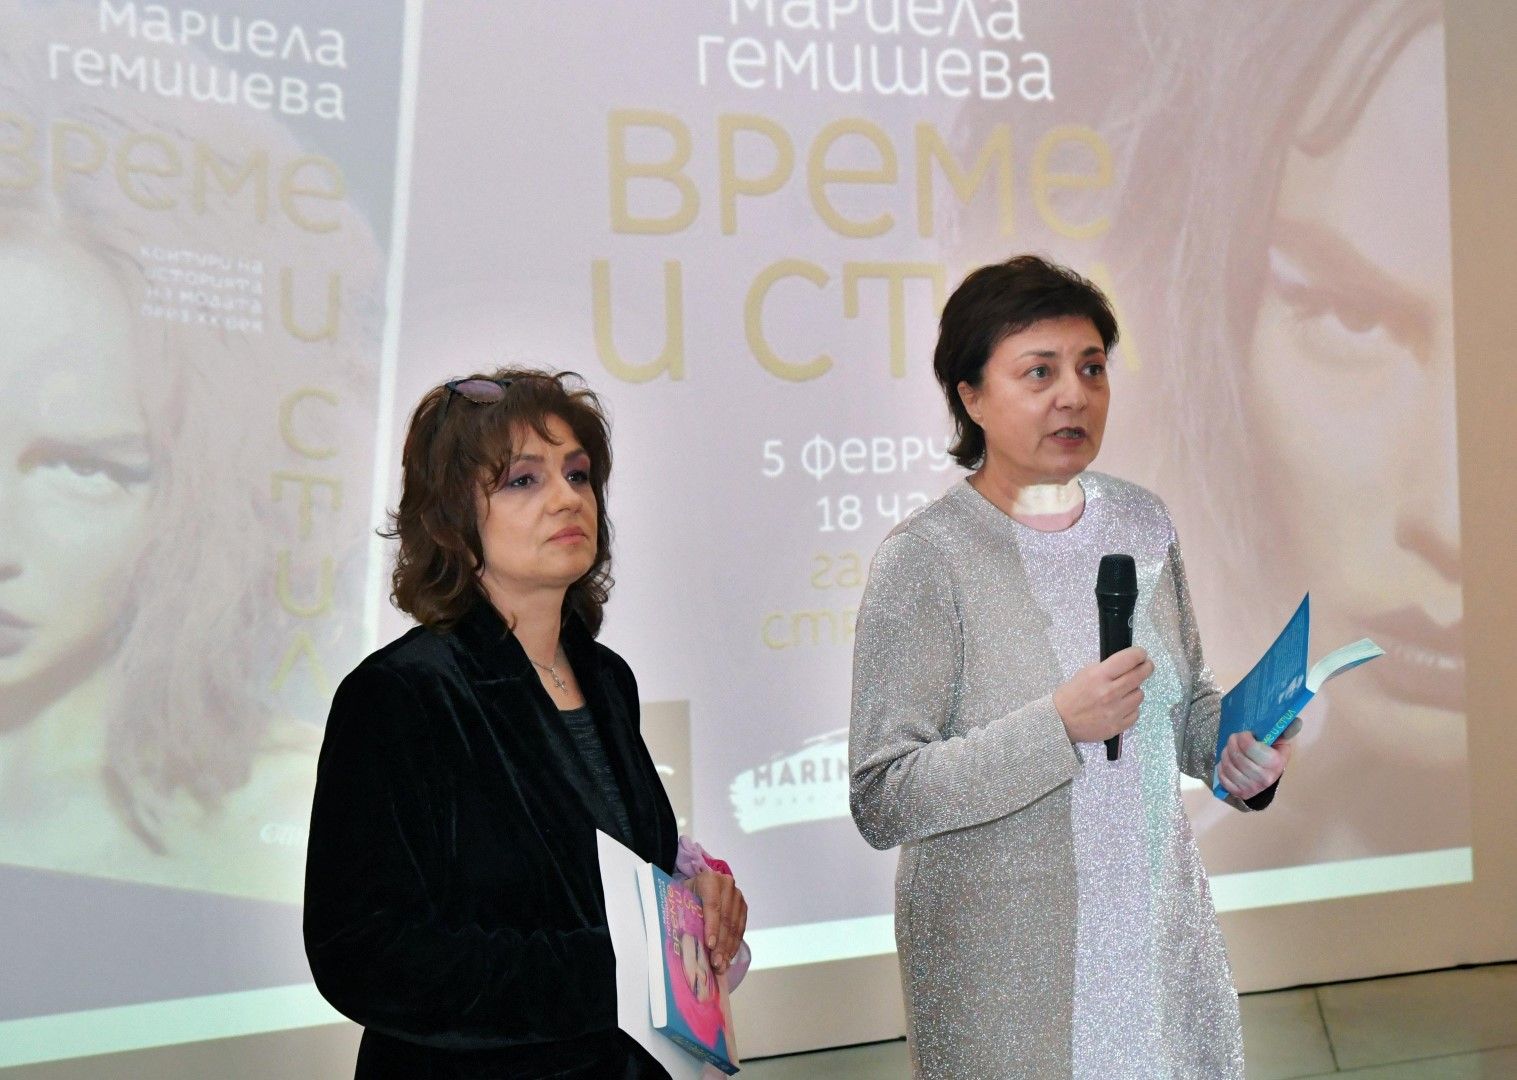 Мариела Гемишева и Мария Василева